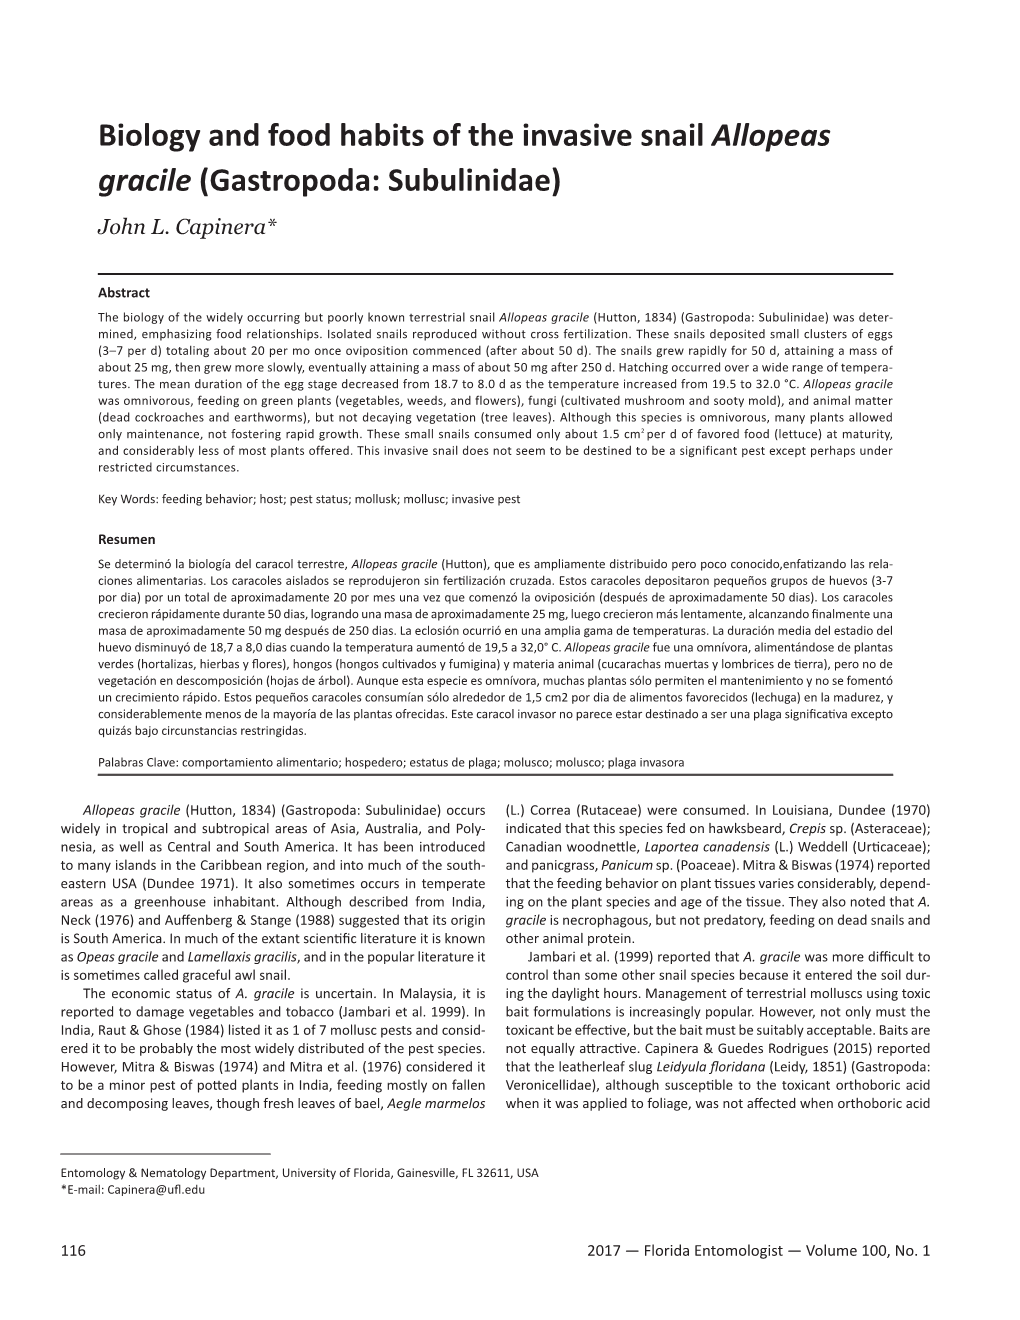 Biology and Food Habits of the Invasive Snail Allopeas Gracile (Gastropoda: Subulinidae) John L